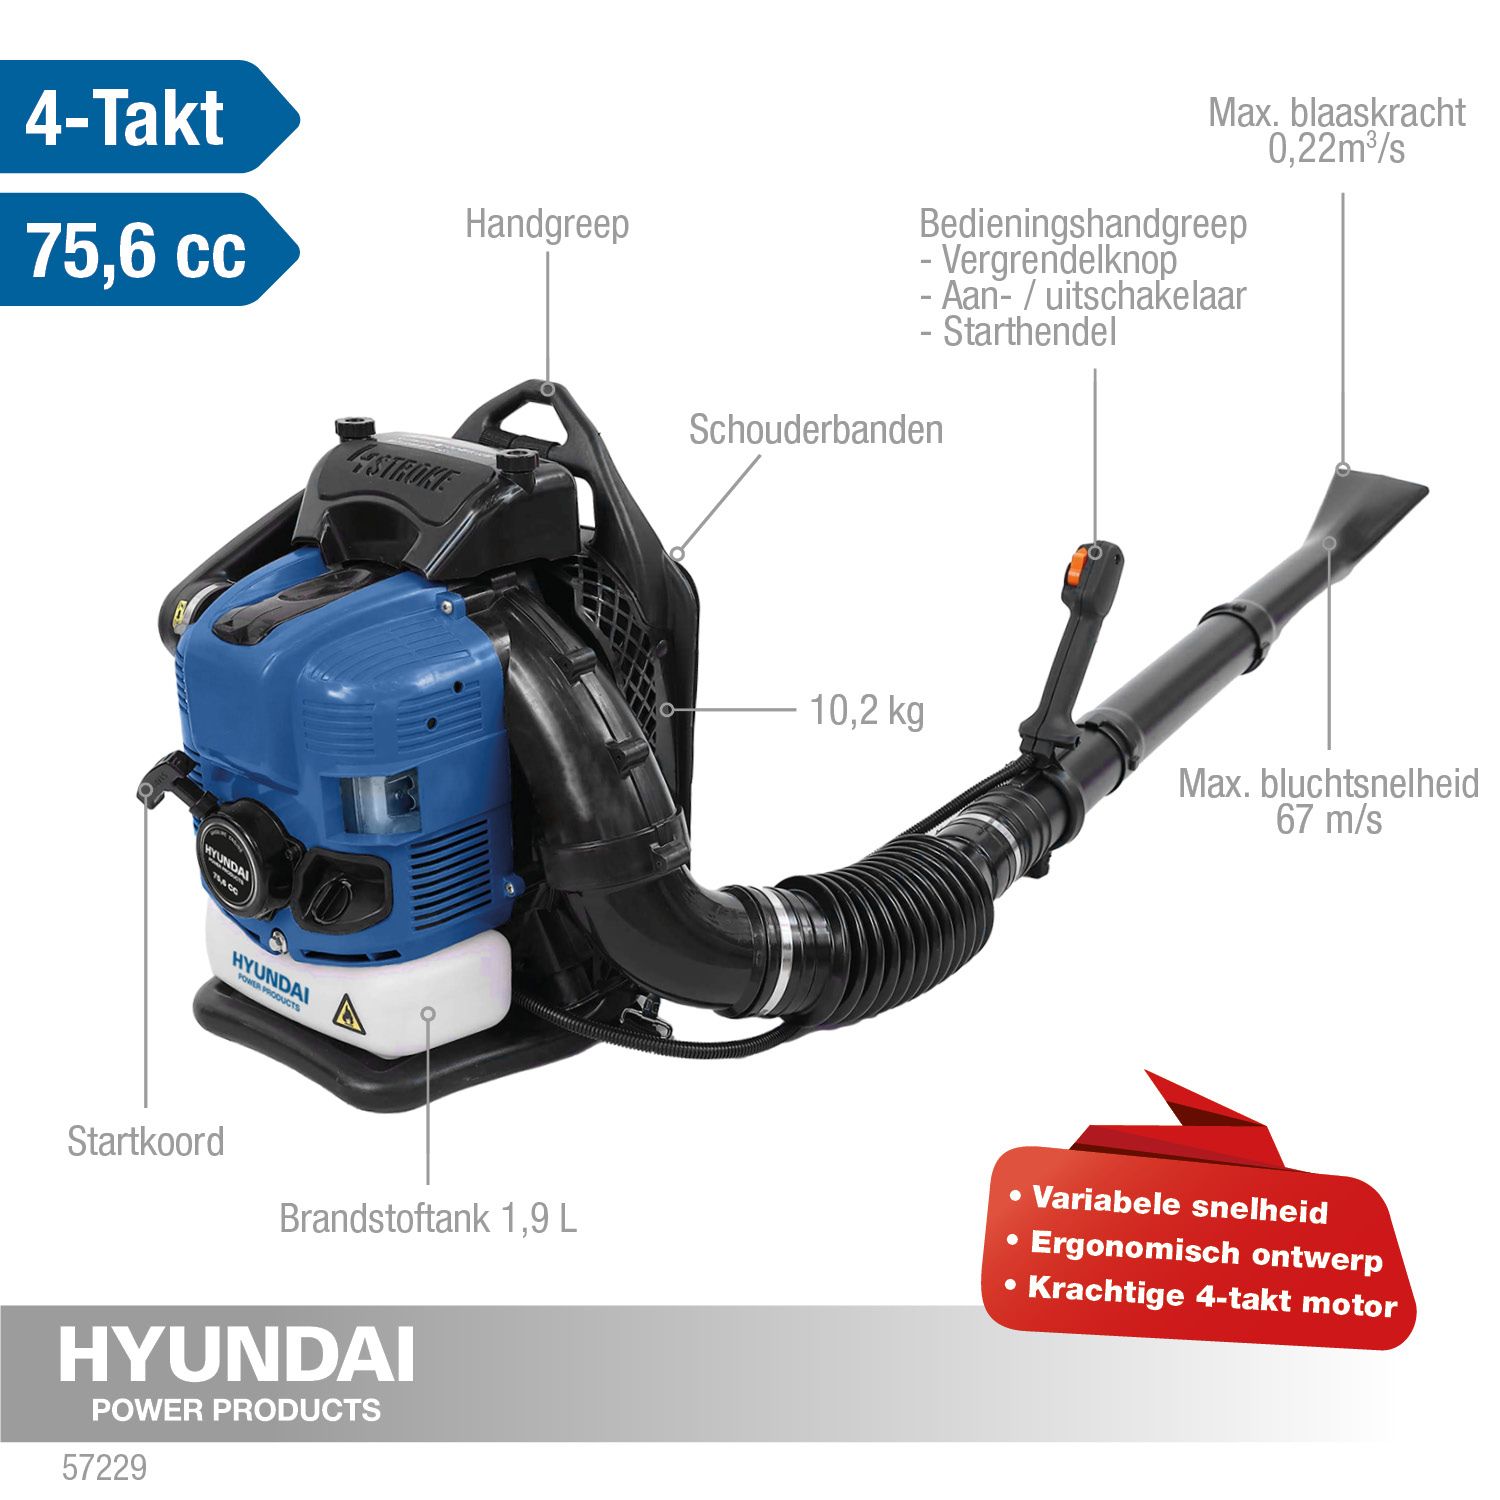 Hyundai Bladblazer benzine 76cc - 4takt